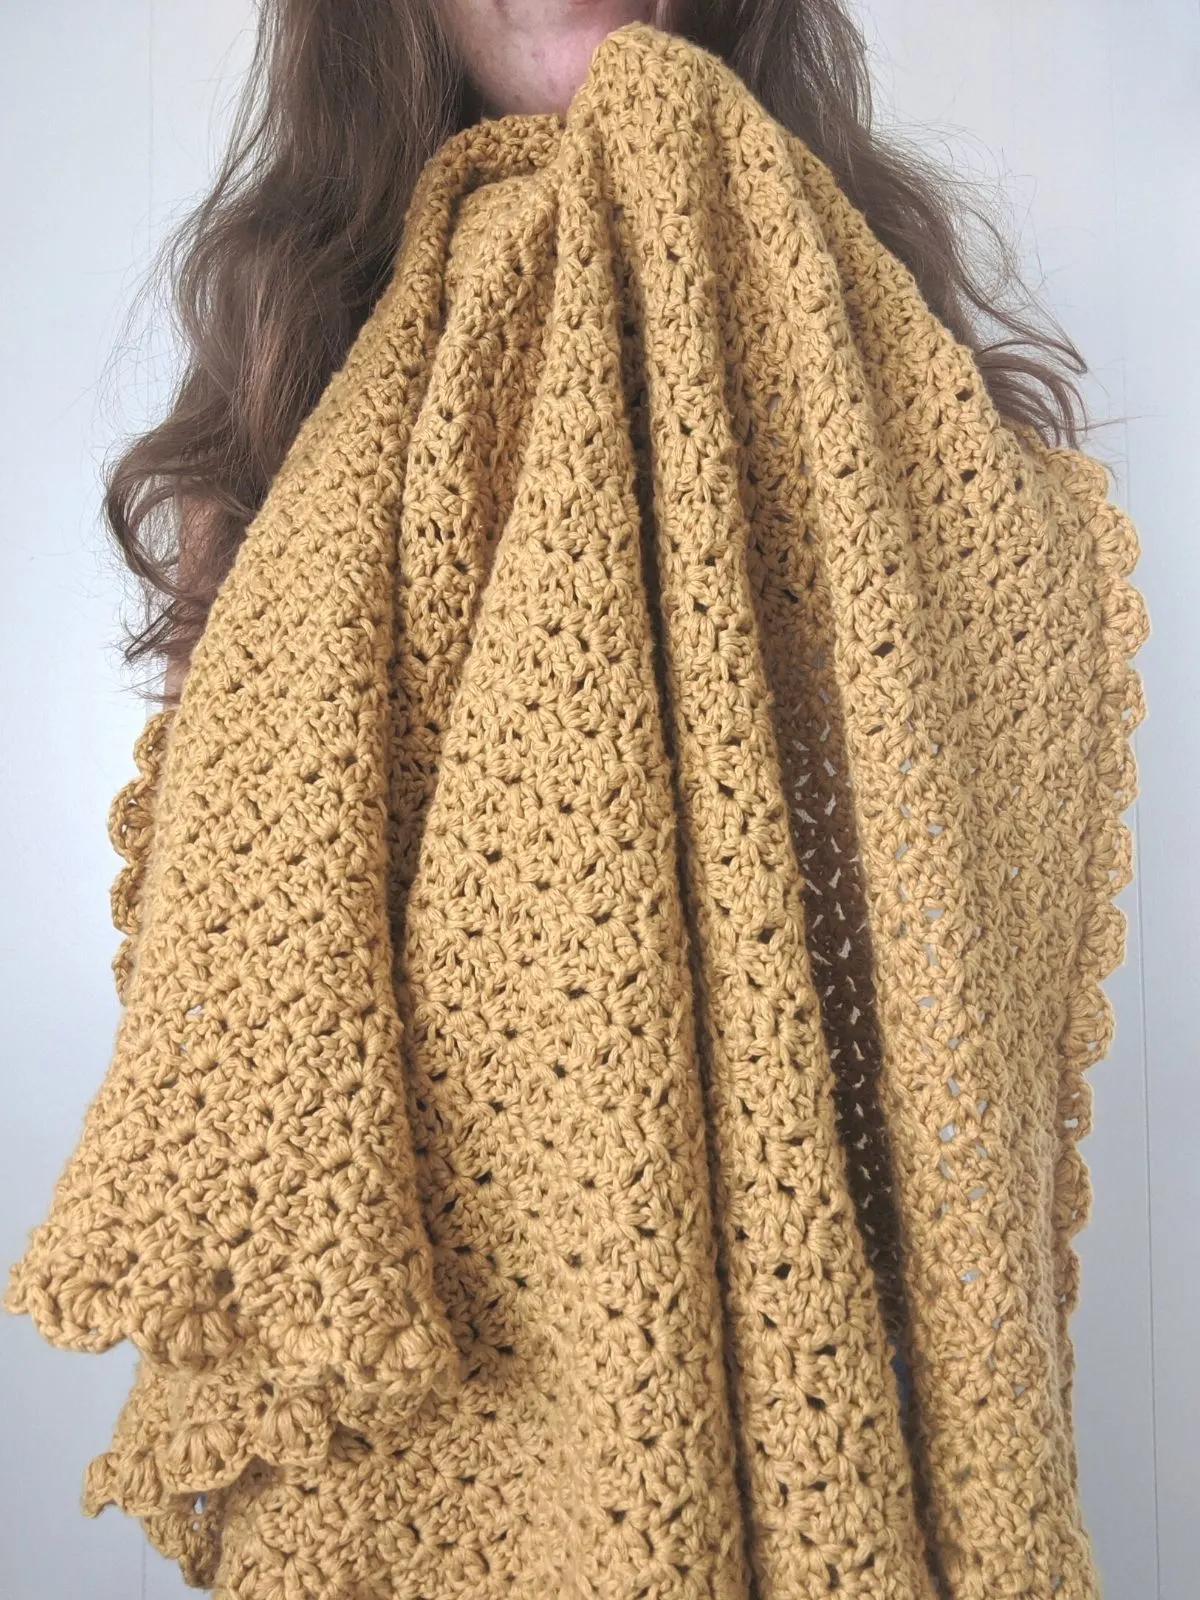 Crochet Patterns For Cotton Yarn - Through The Loop Yarn Craft